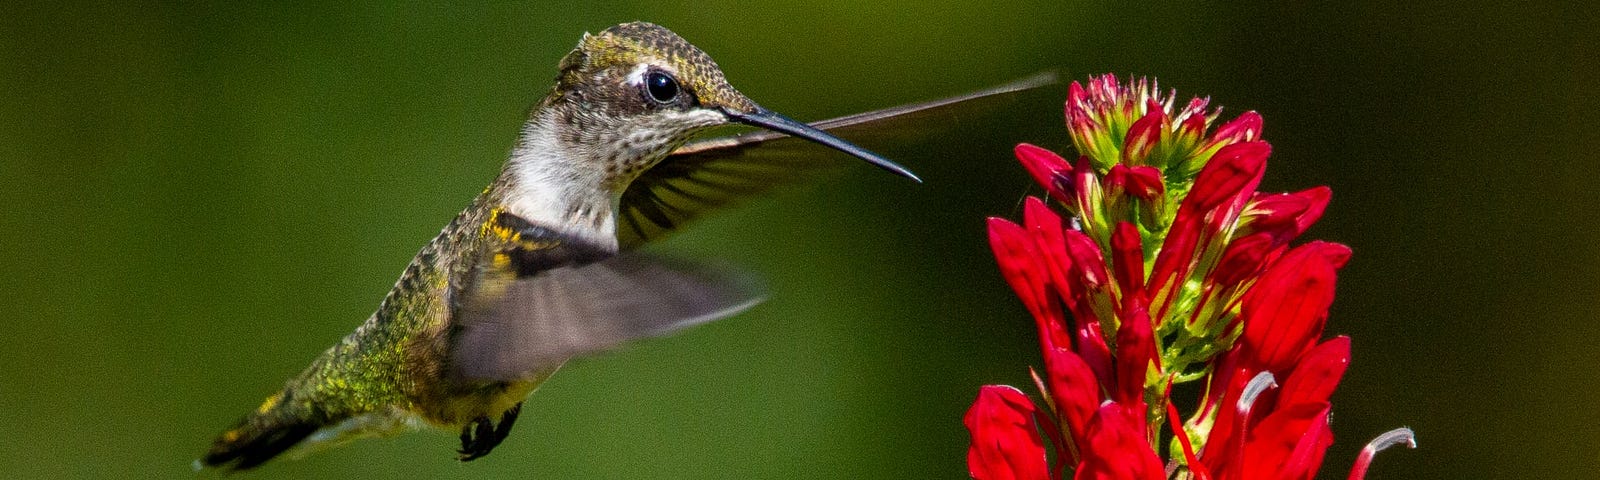 Hummingbird flying to red cardinal flower.